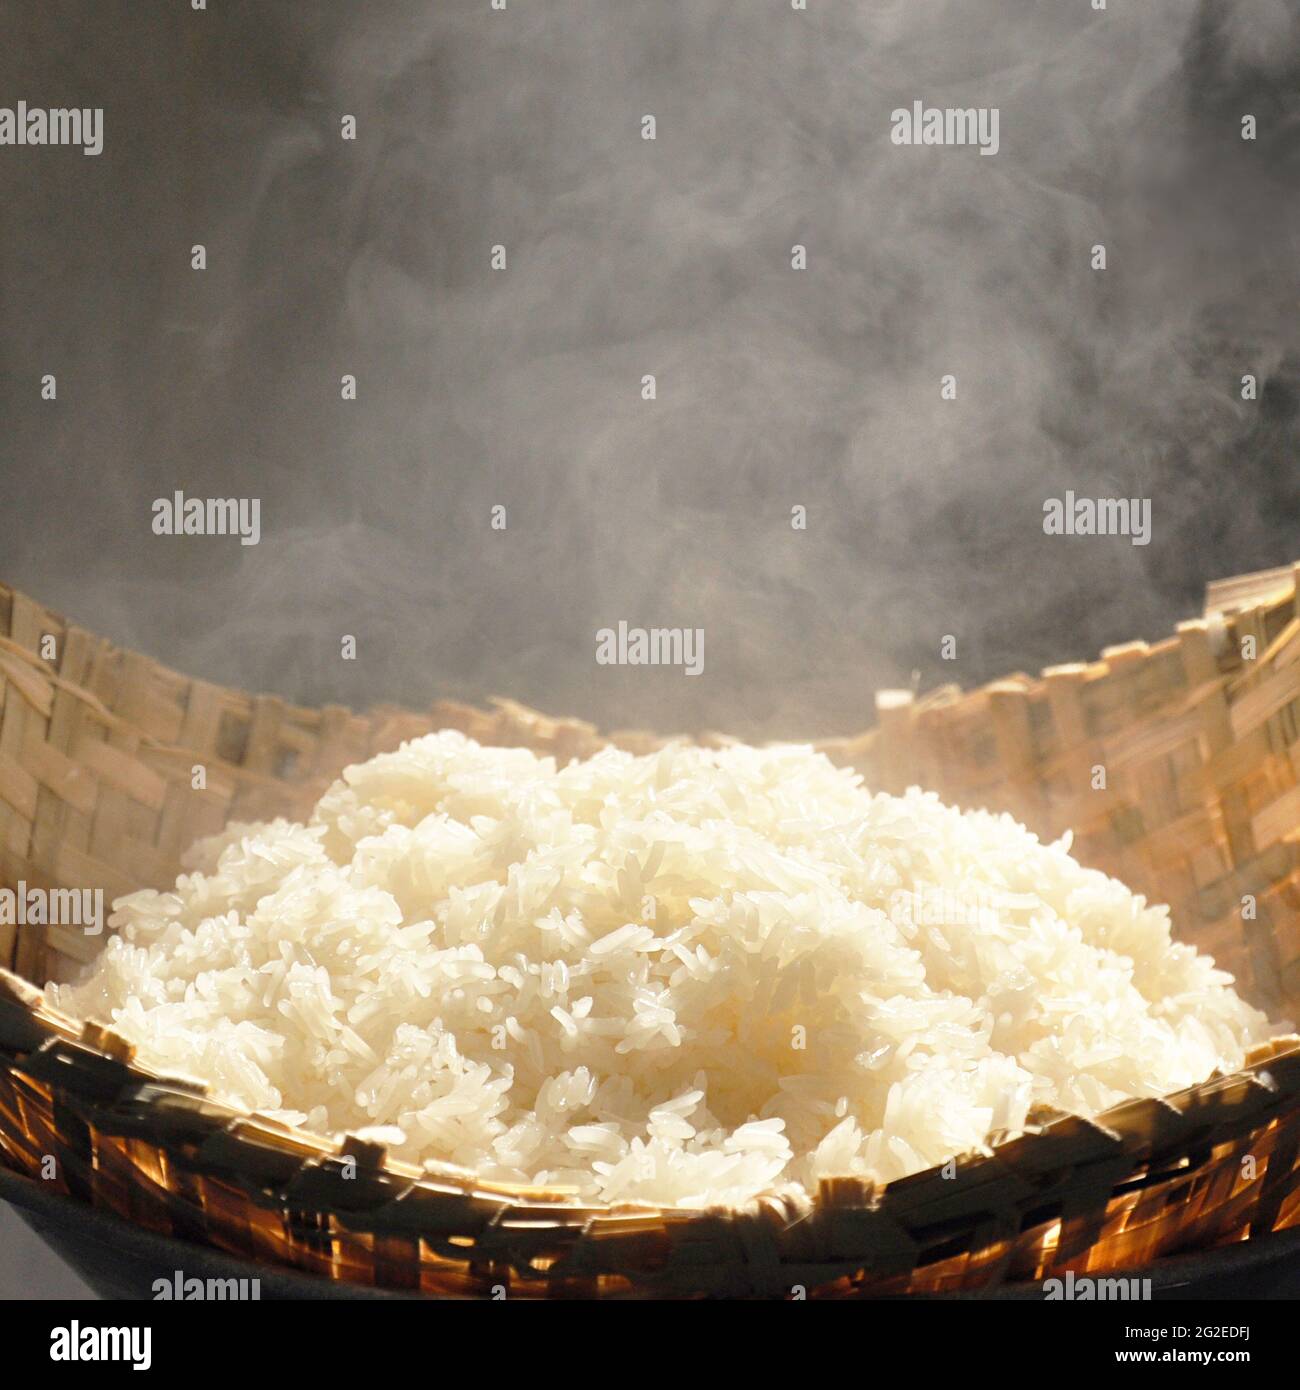 https://c8.alamy.com/comp/2G2EDFJ/cooked-sticky-rice-in-wooden-steamer-2G2EDFJ.jpg